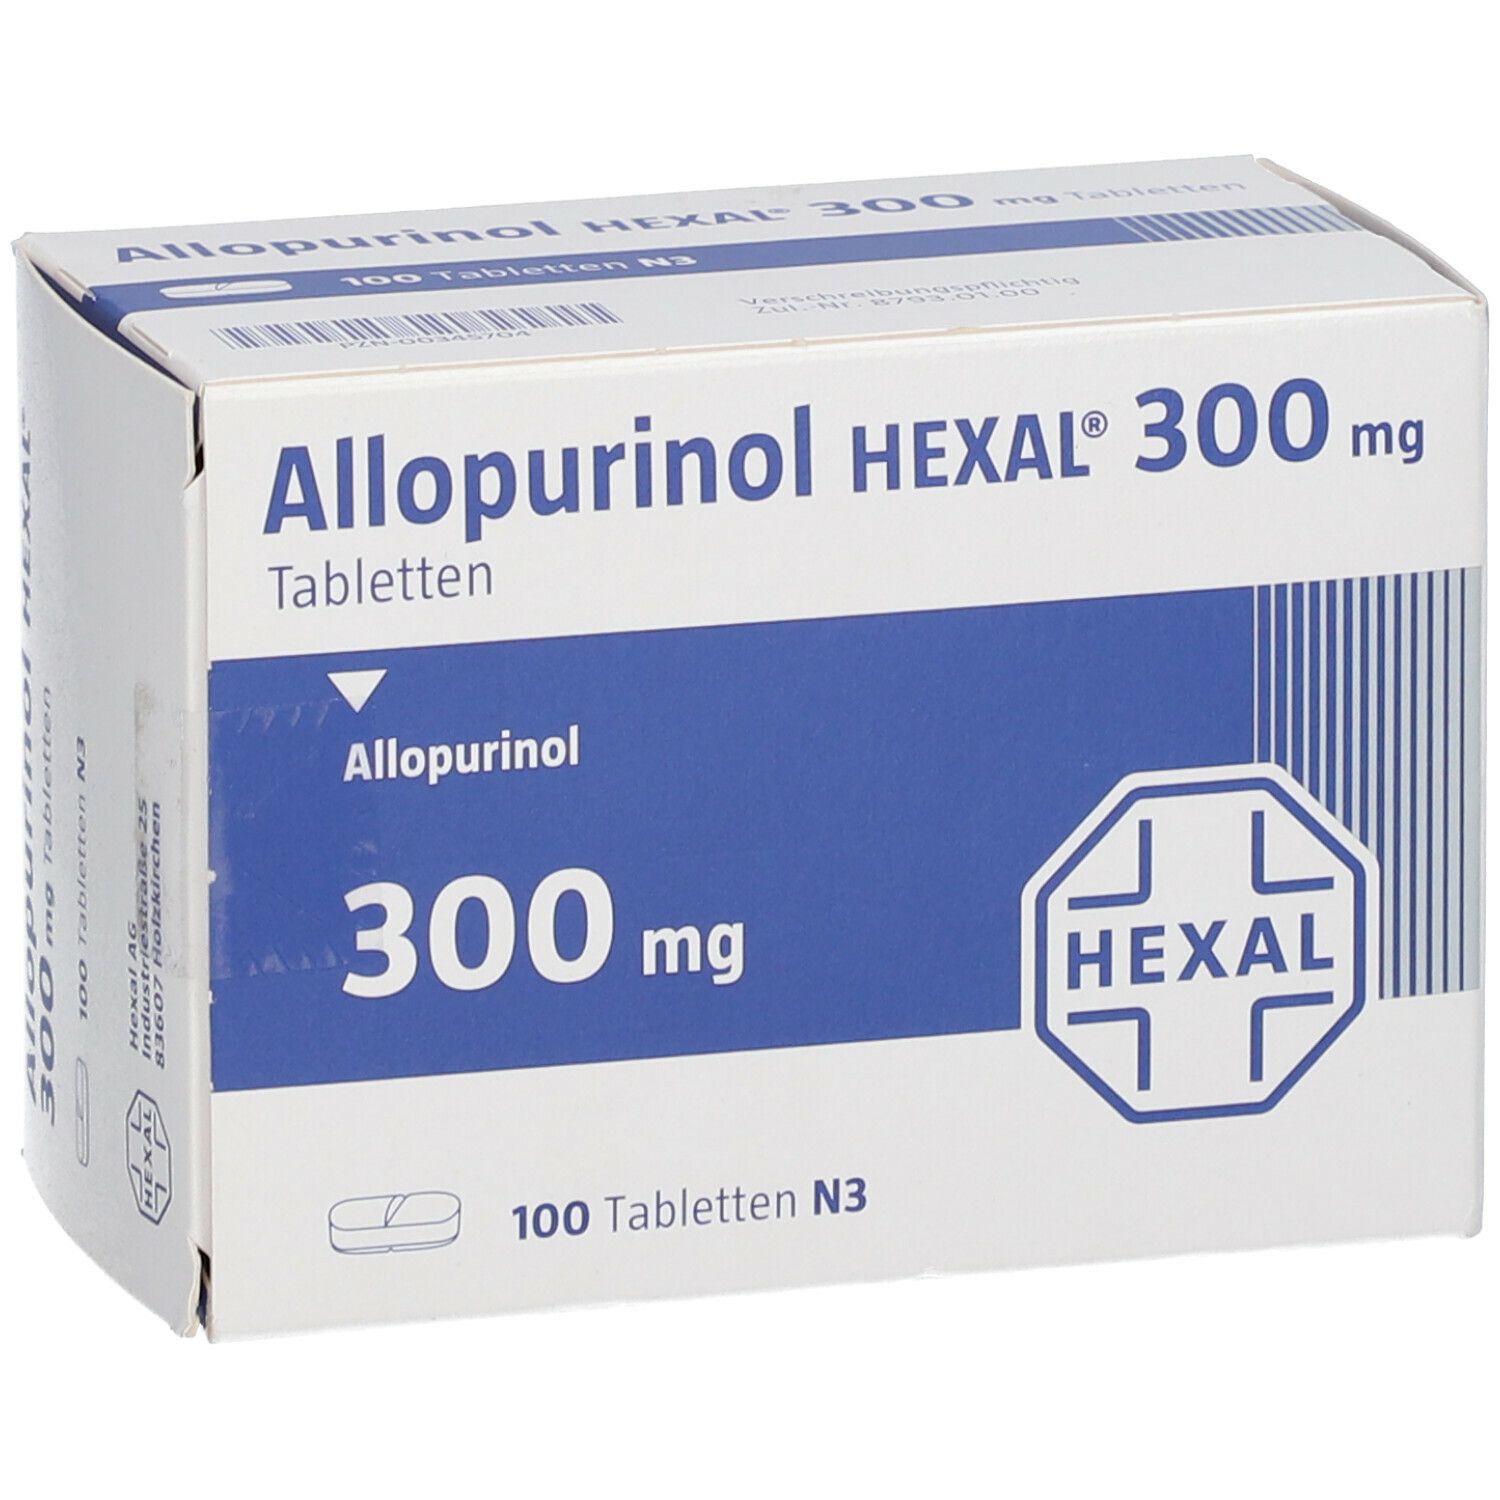 Allopurinol HEXAL® 300 mg